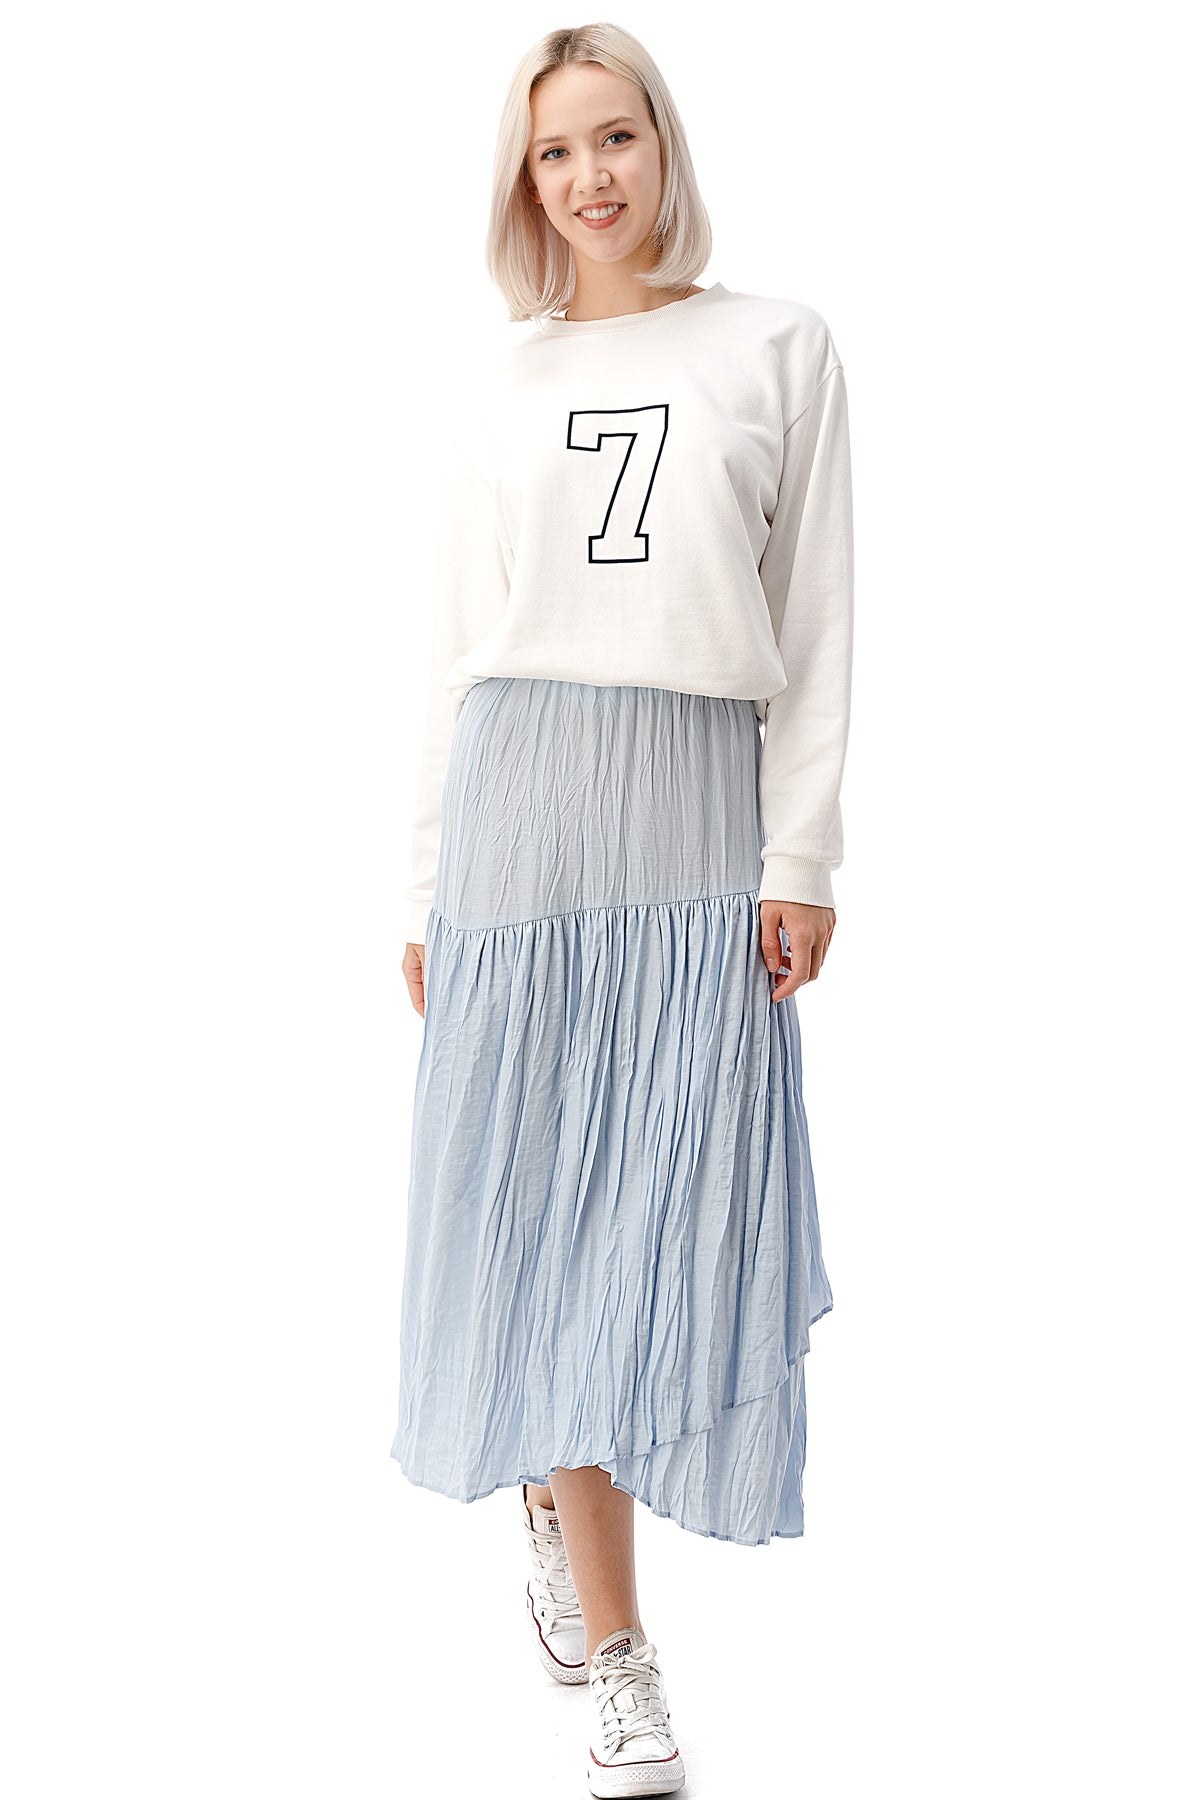 EDGY Land Girl's and Women's High Waist Over Lap Bias Seam Shirred Midi Flowy Skirt